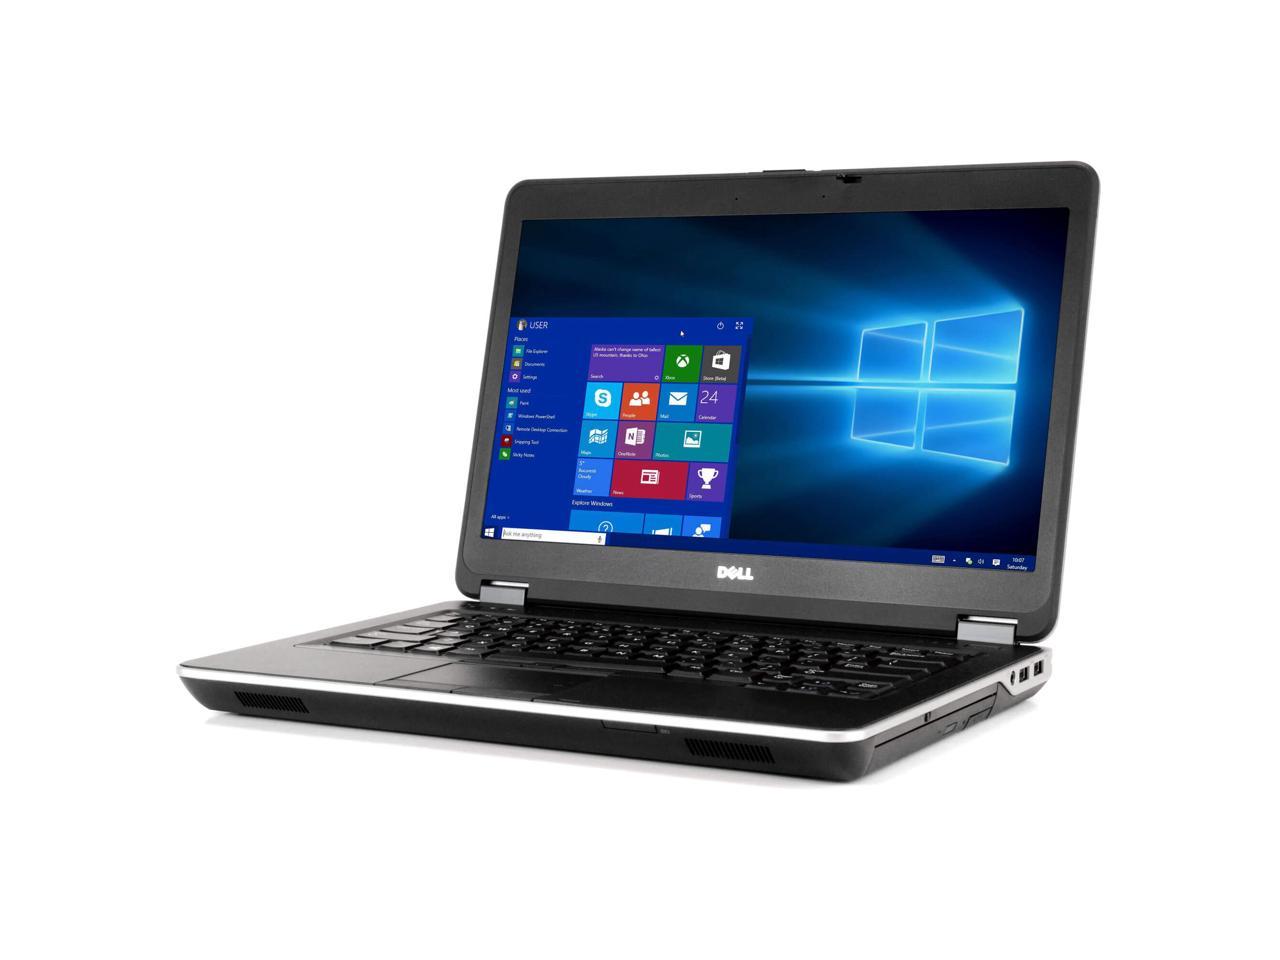 Dell Latitude E6440 Laptop Computer, 2.60 GHz Intel i5 Dual Core Gen 4, 4GB DDR3 RAM, 500GB SATA Hard Drive, Windows 10 Home 64 Bit, 14" Screen (B GRADE)